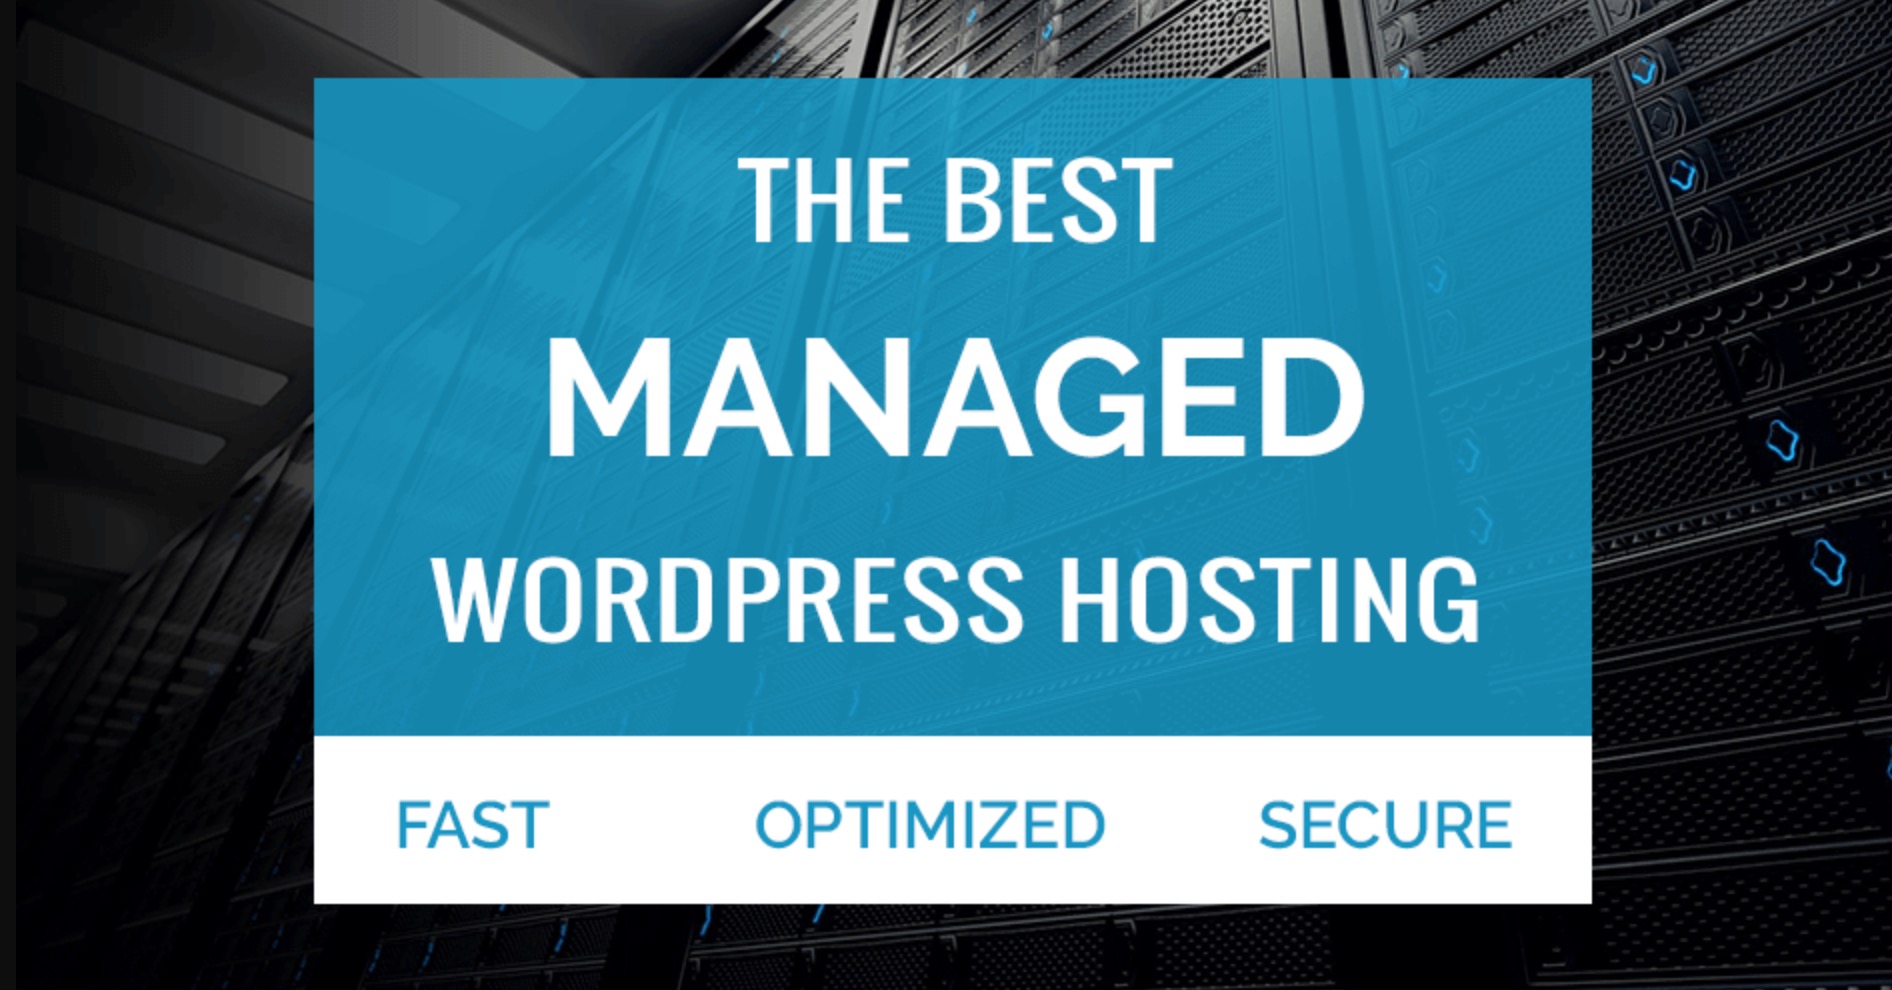 The best Managed WordPress hosting service 2018